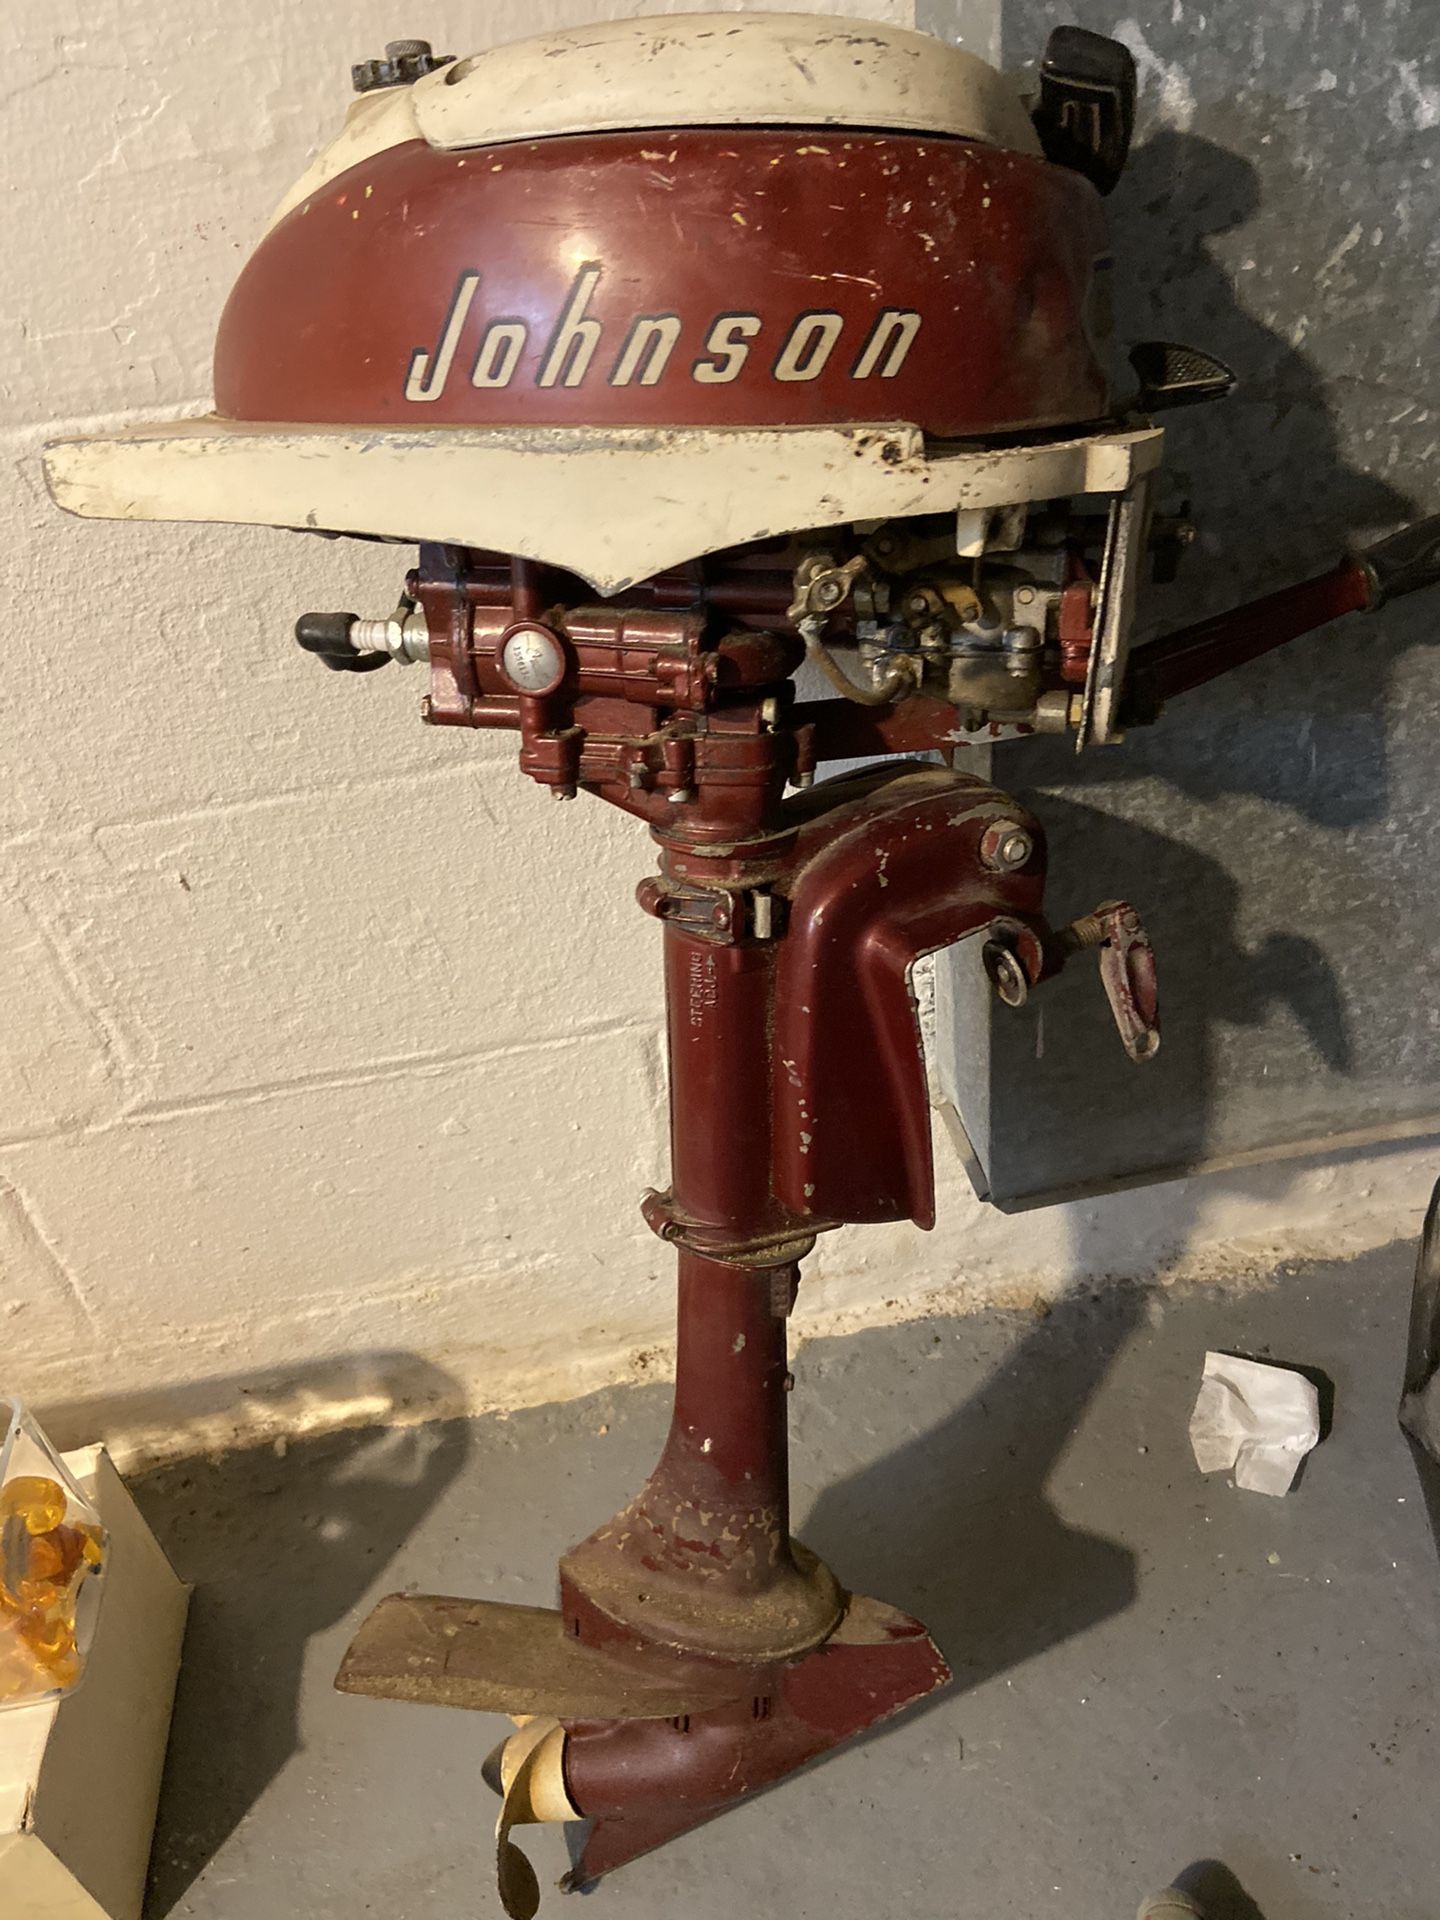 Johnson outboard motor (1954)